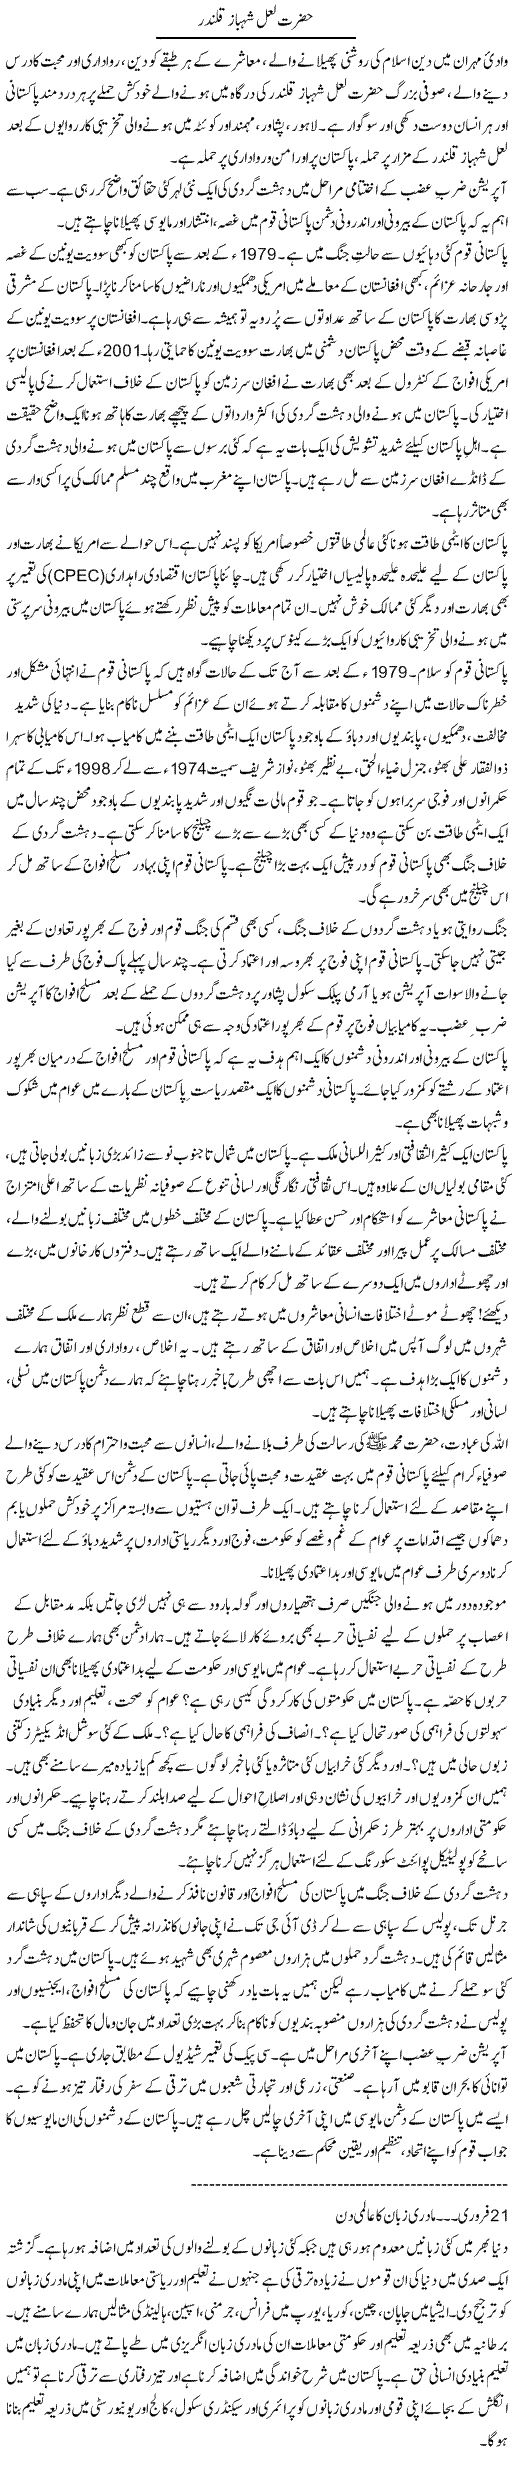 Hazrat Laal Shahbaz Qalandar | Dr. Waqar Yousuf Azeemi | Daily Urdu Columns